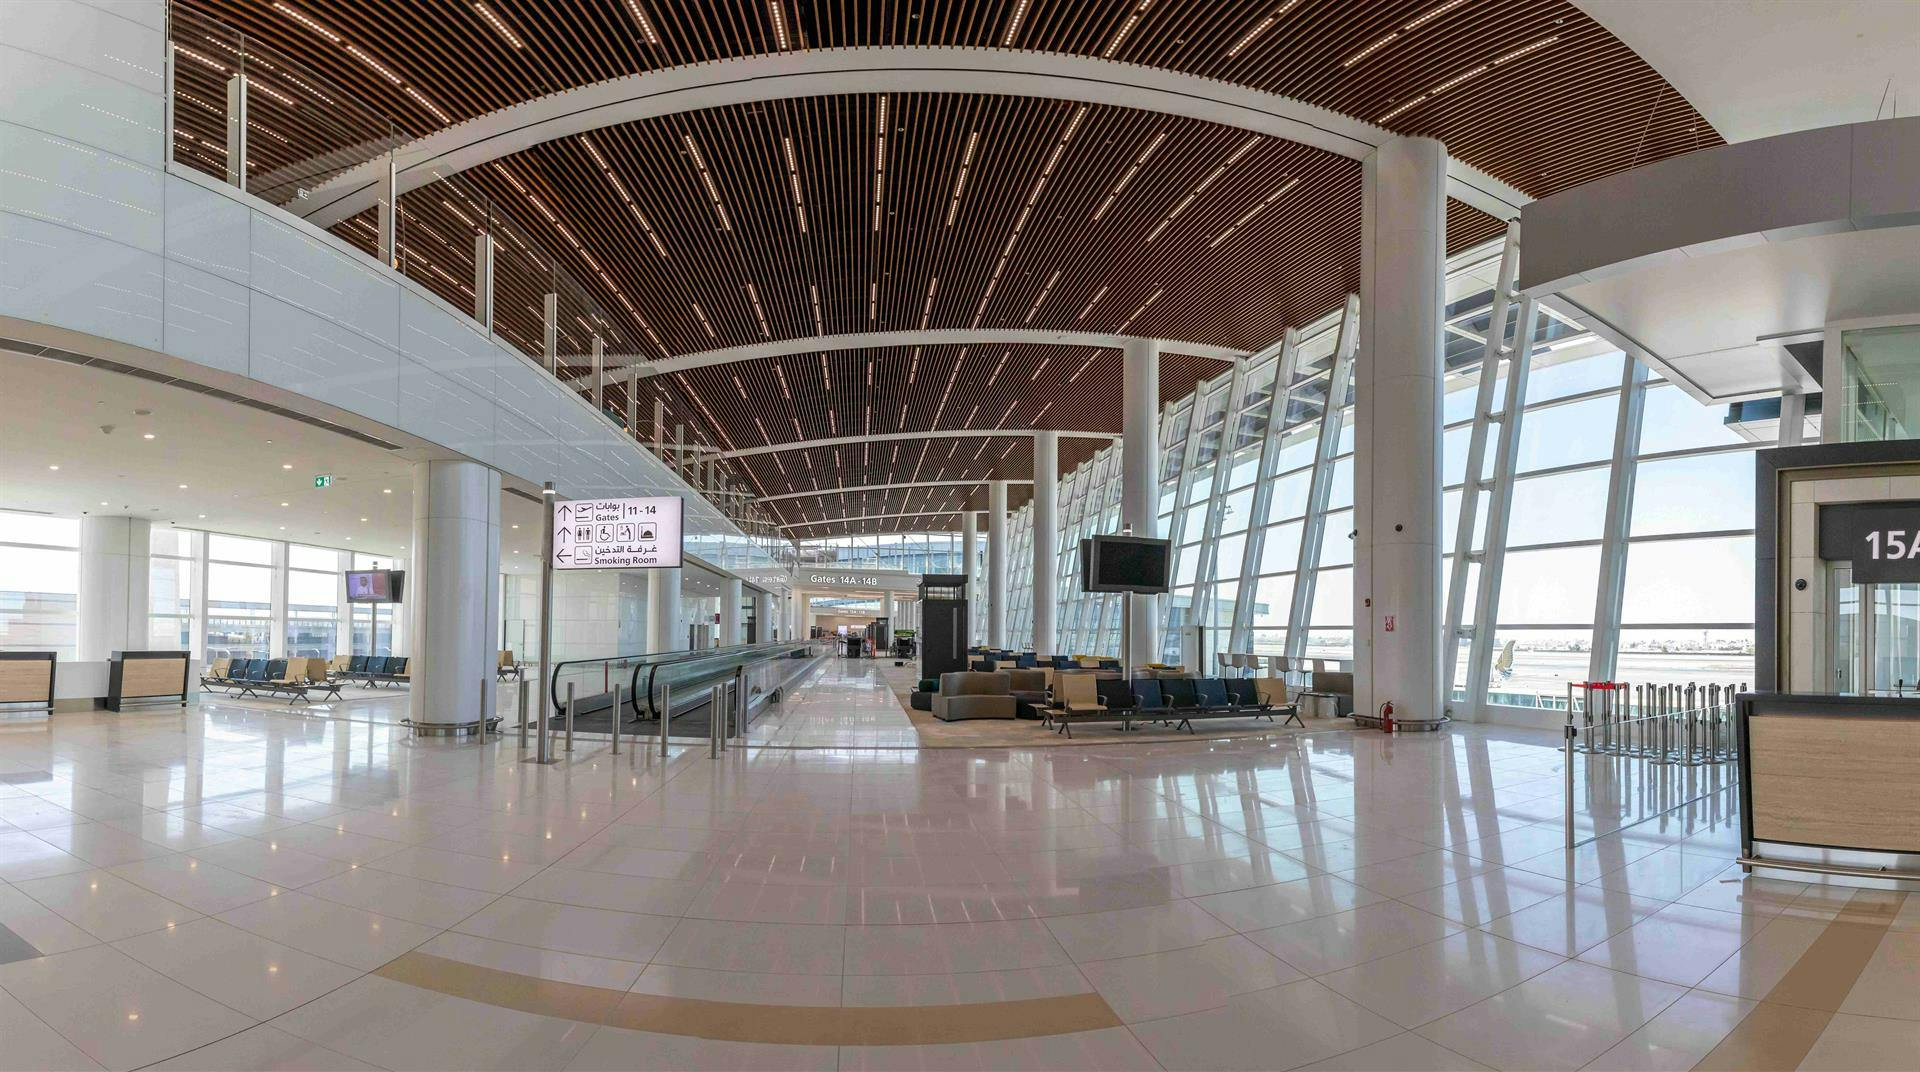 Bahrain International Airport